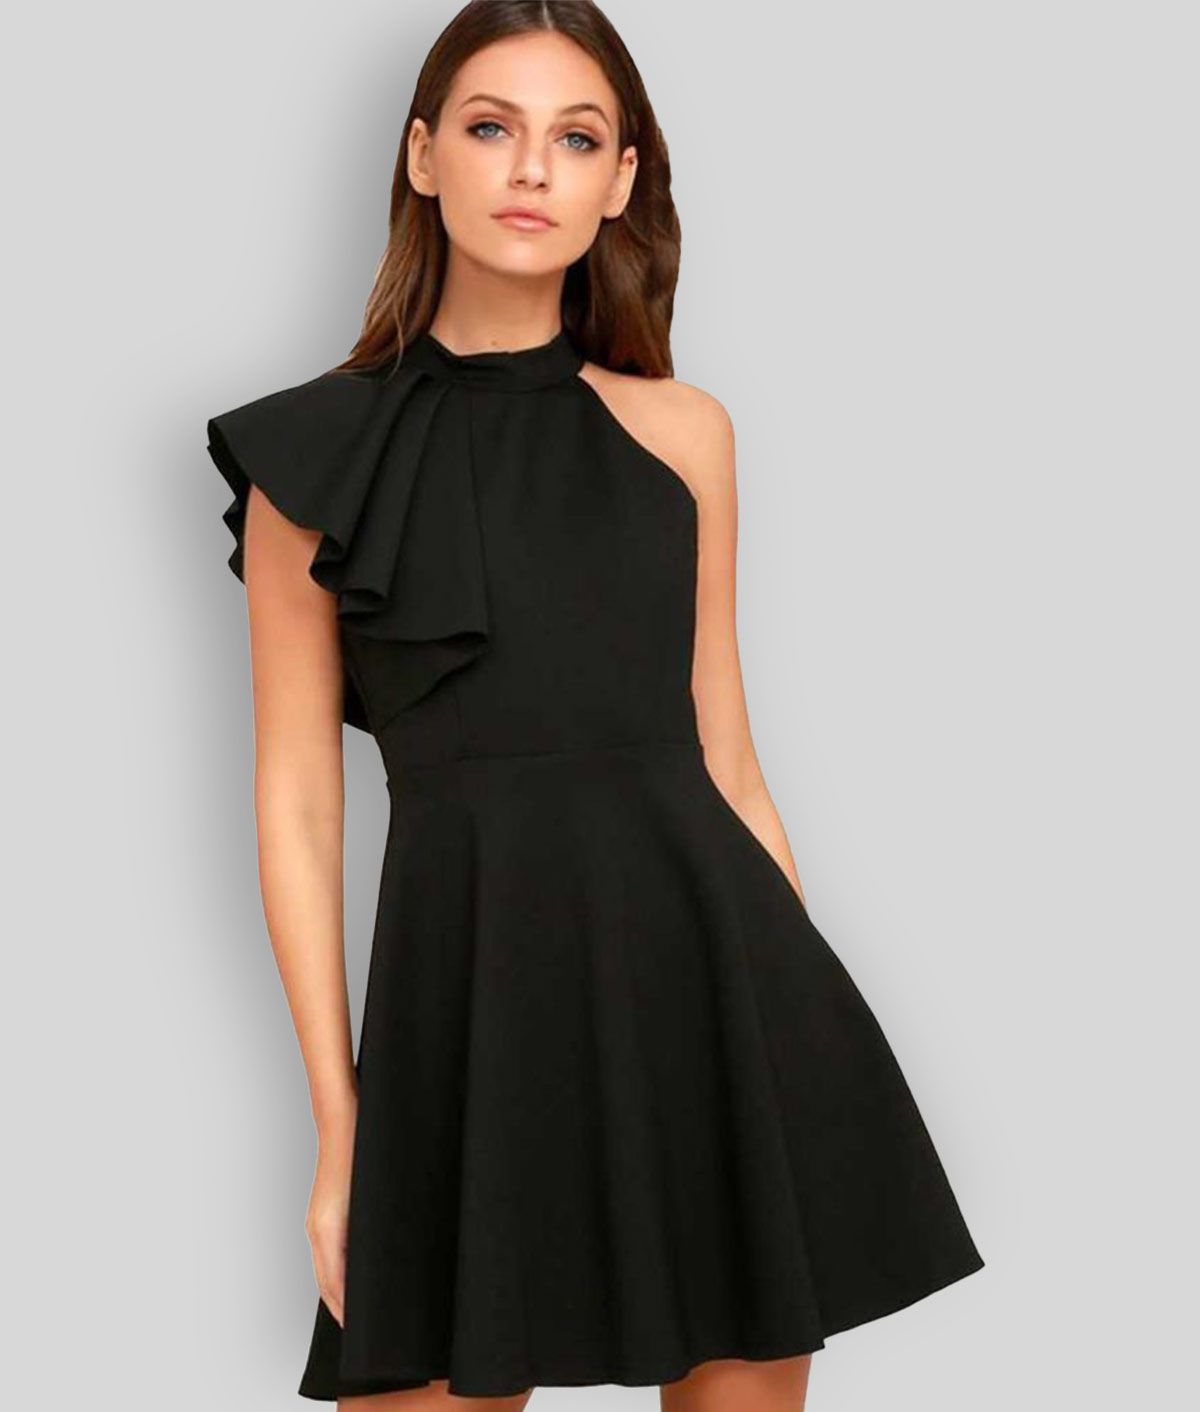     			Addyvero - Black Cotton Blend Women's A-line Dress ( Pack of 1 )